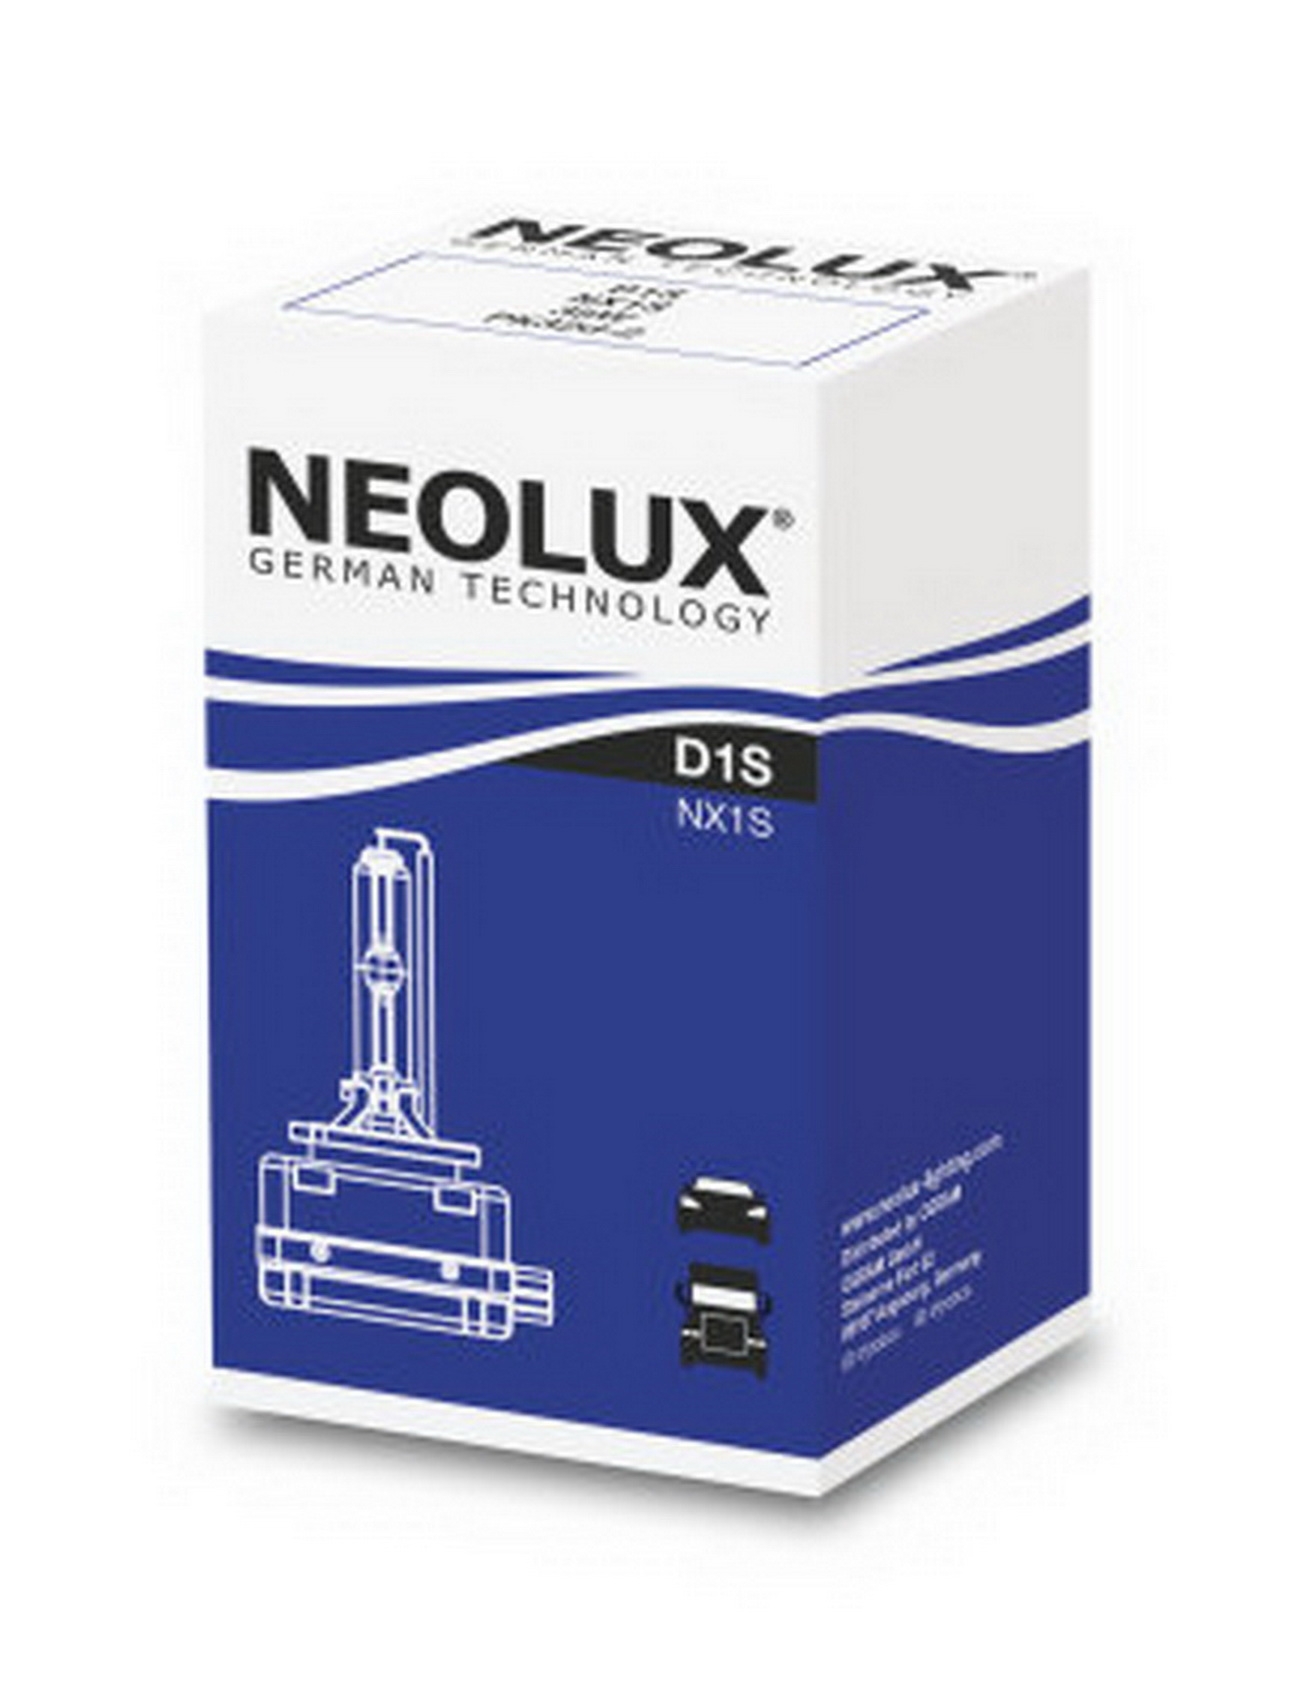 Neolux EREDETI D1S HID Xenon lámpa D1S-NX1S Neolux 35W